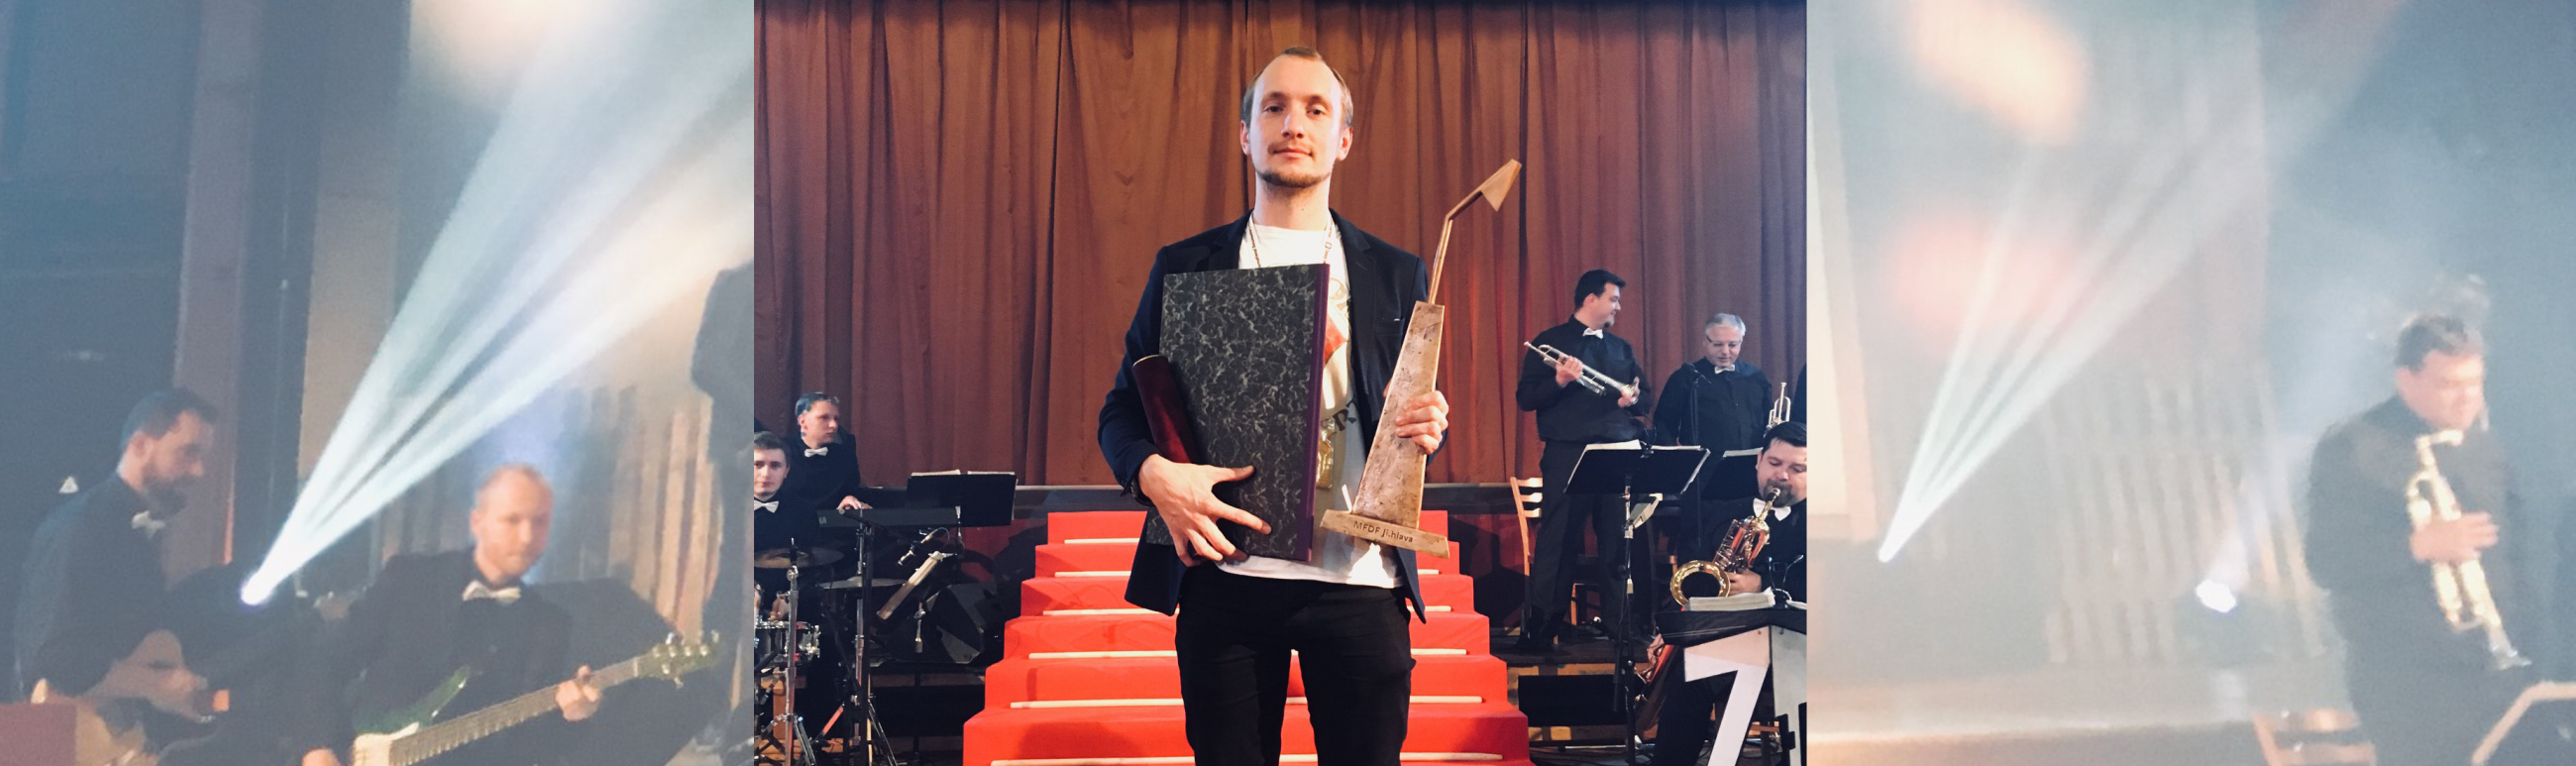 Mihkel Oksmann with the award